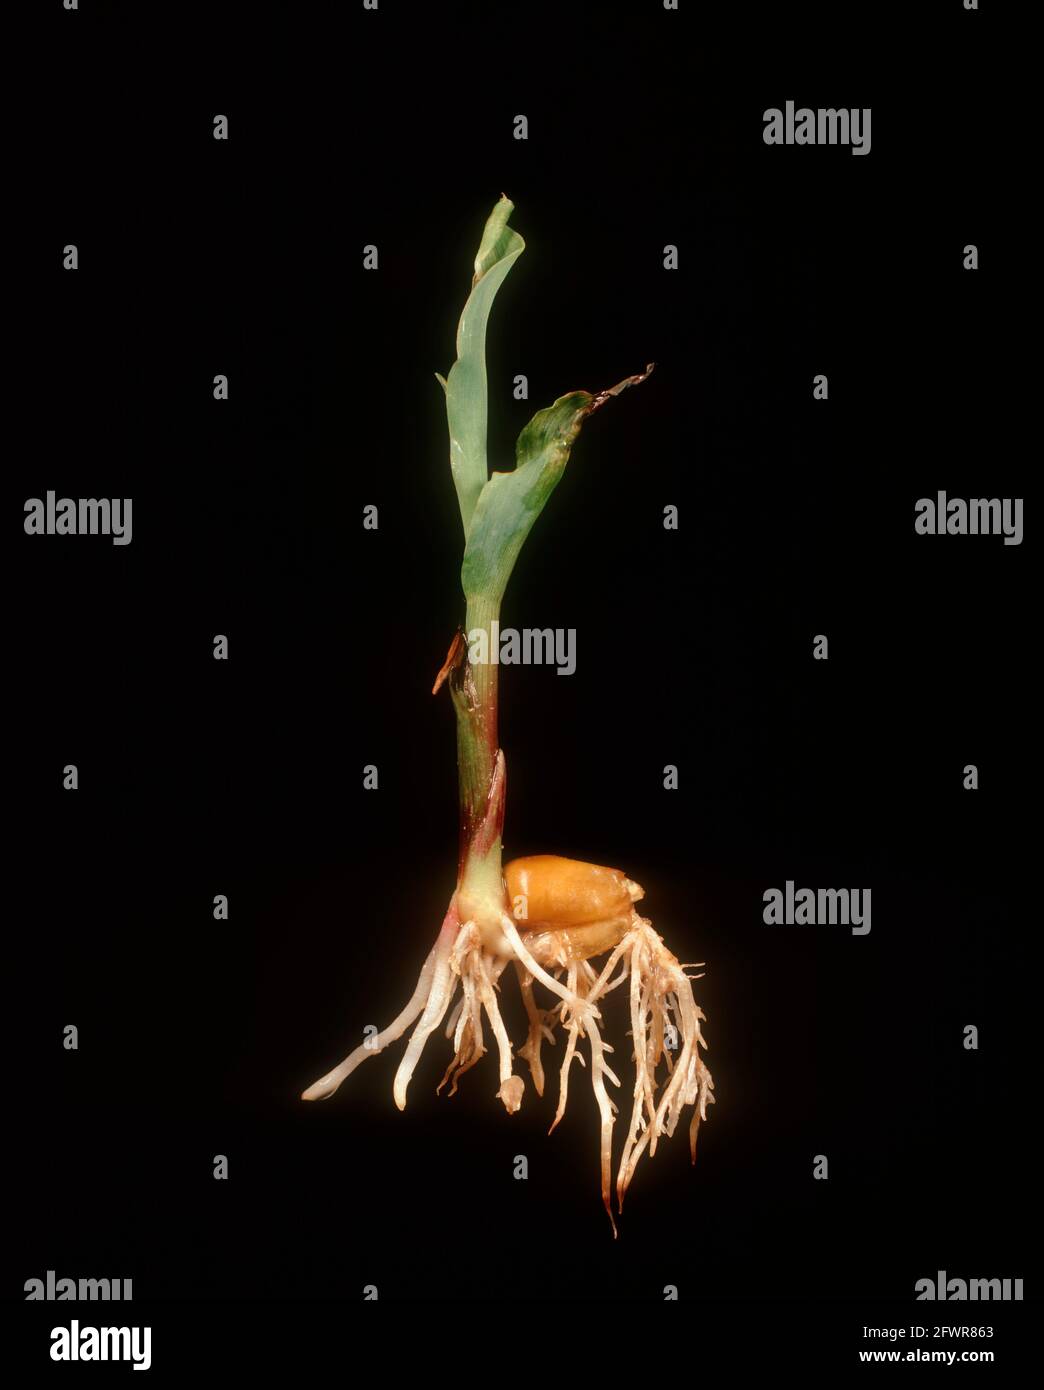 Damping off (Pythium ultimum) damage to maize, corn or sweetcorn seedling Stock Photo